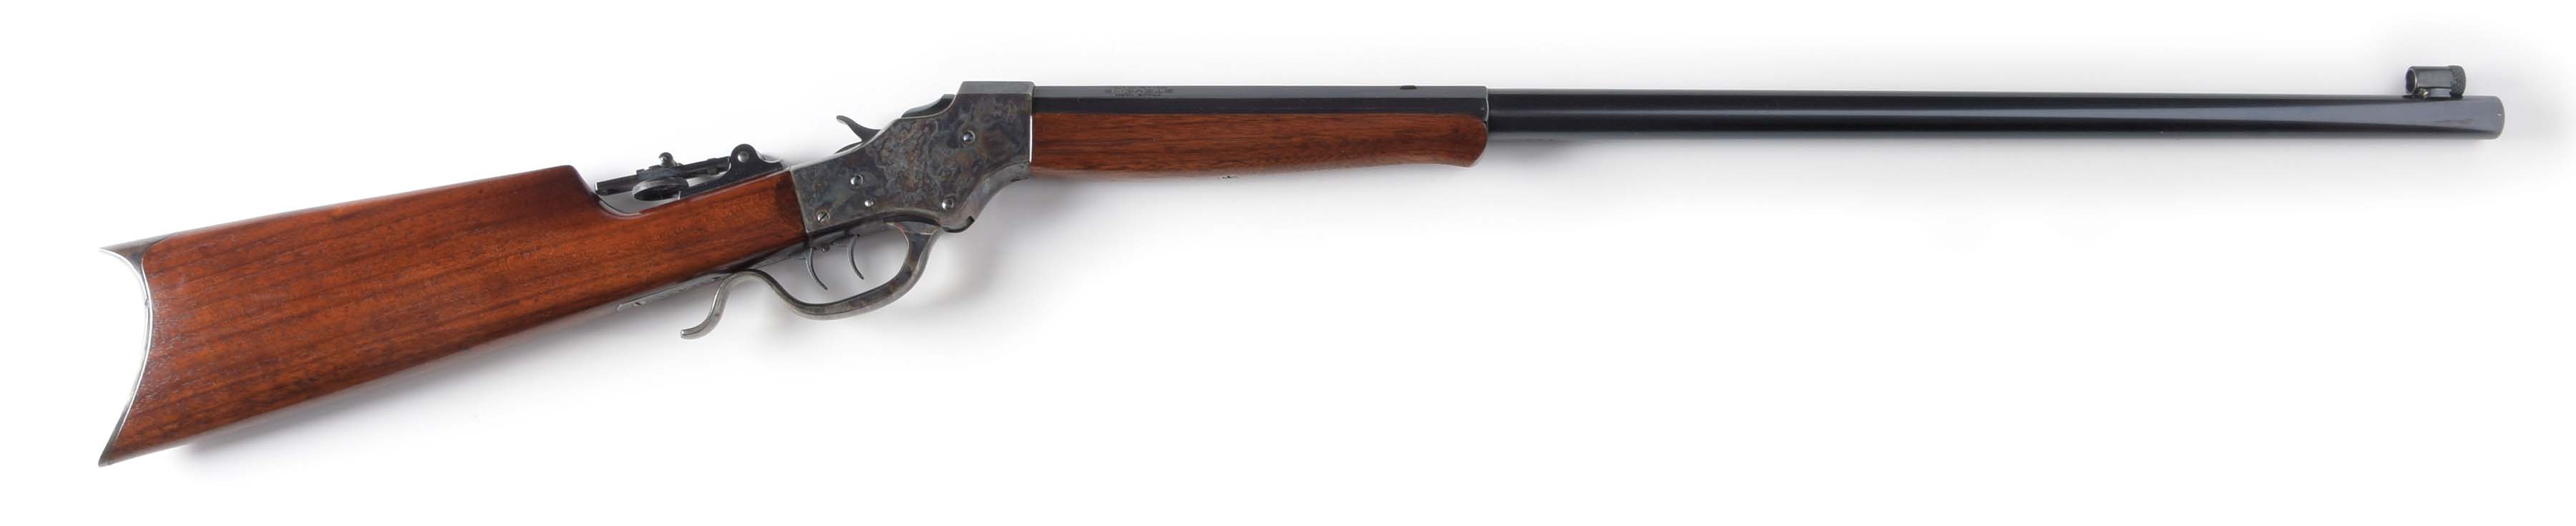 C Stevens Model Ideal Single Shot Rifle Auctions Price Archive